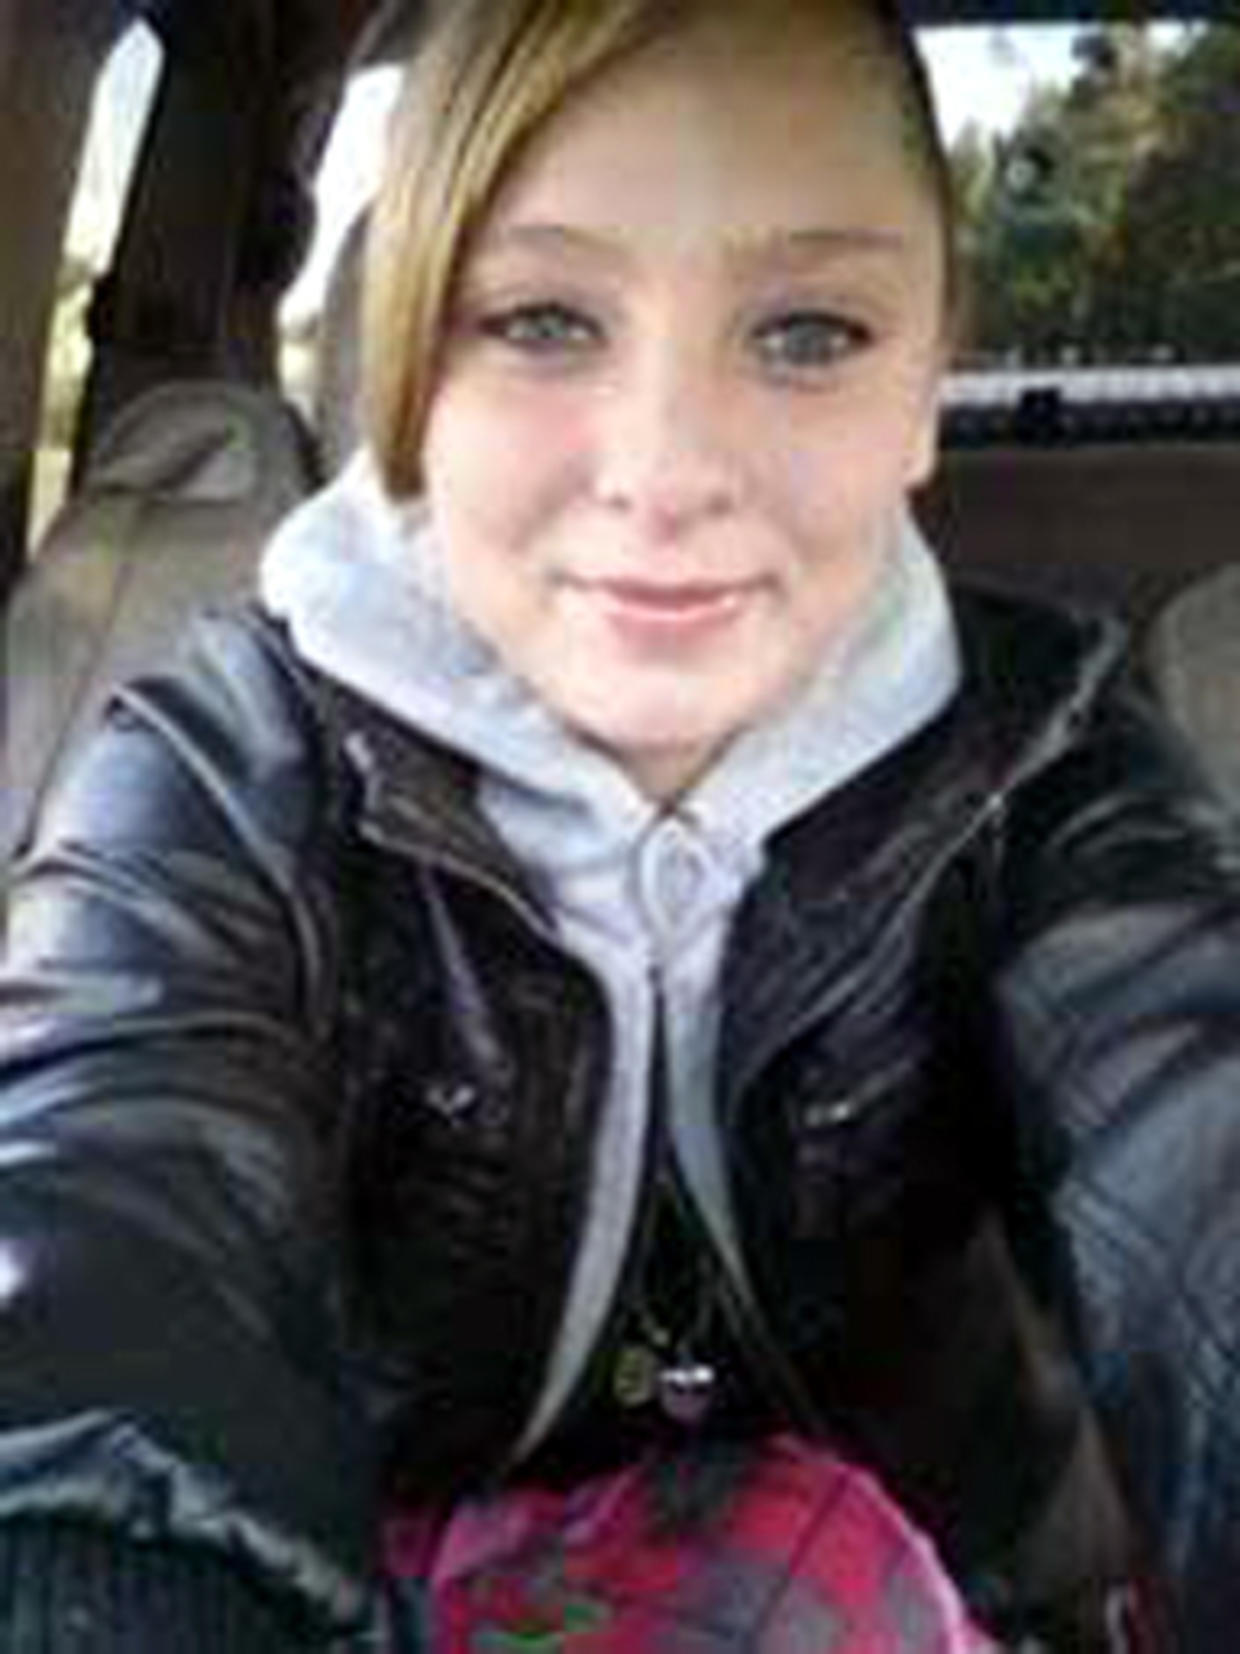 Teen Girl Found Dead At Calif Park Cbs News